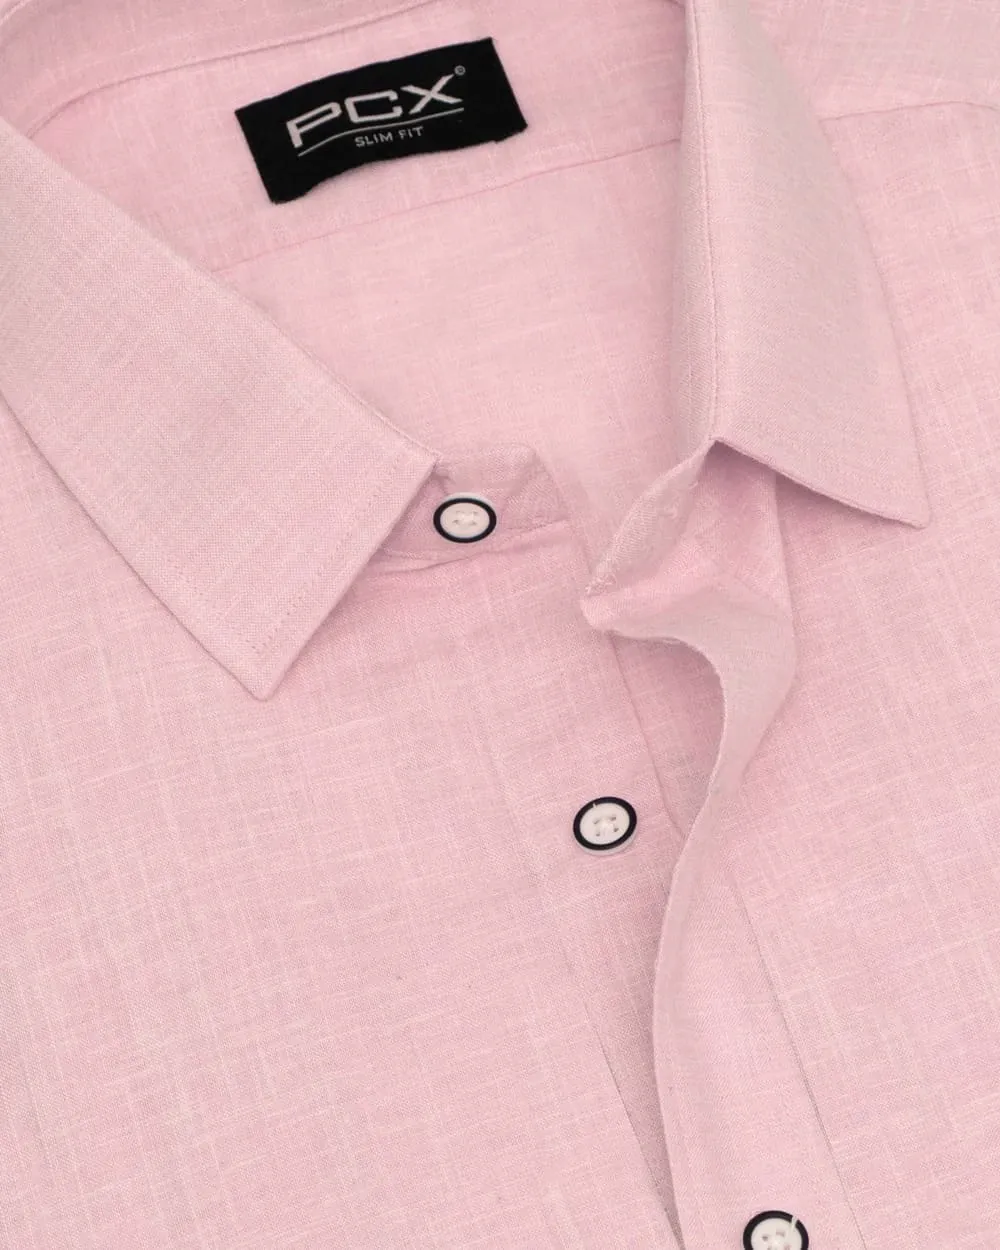 Camisa casual slim fit manga corta jaspeada rosada